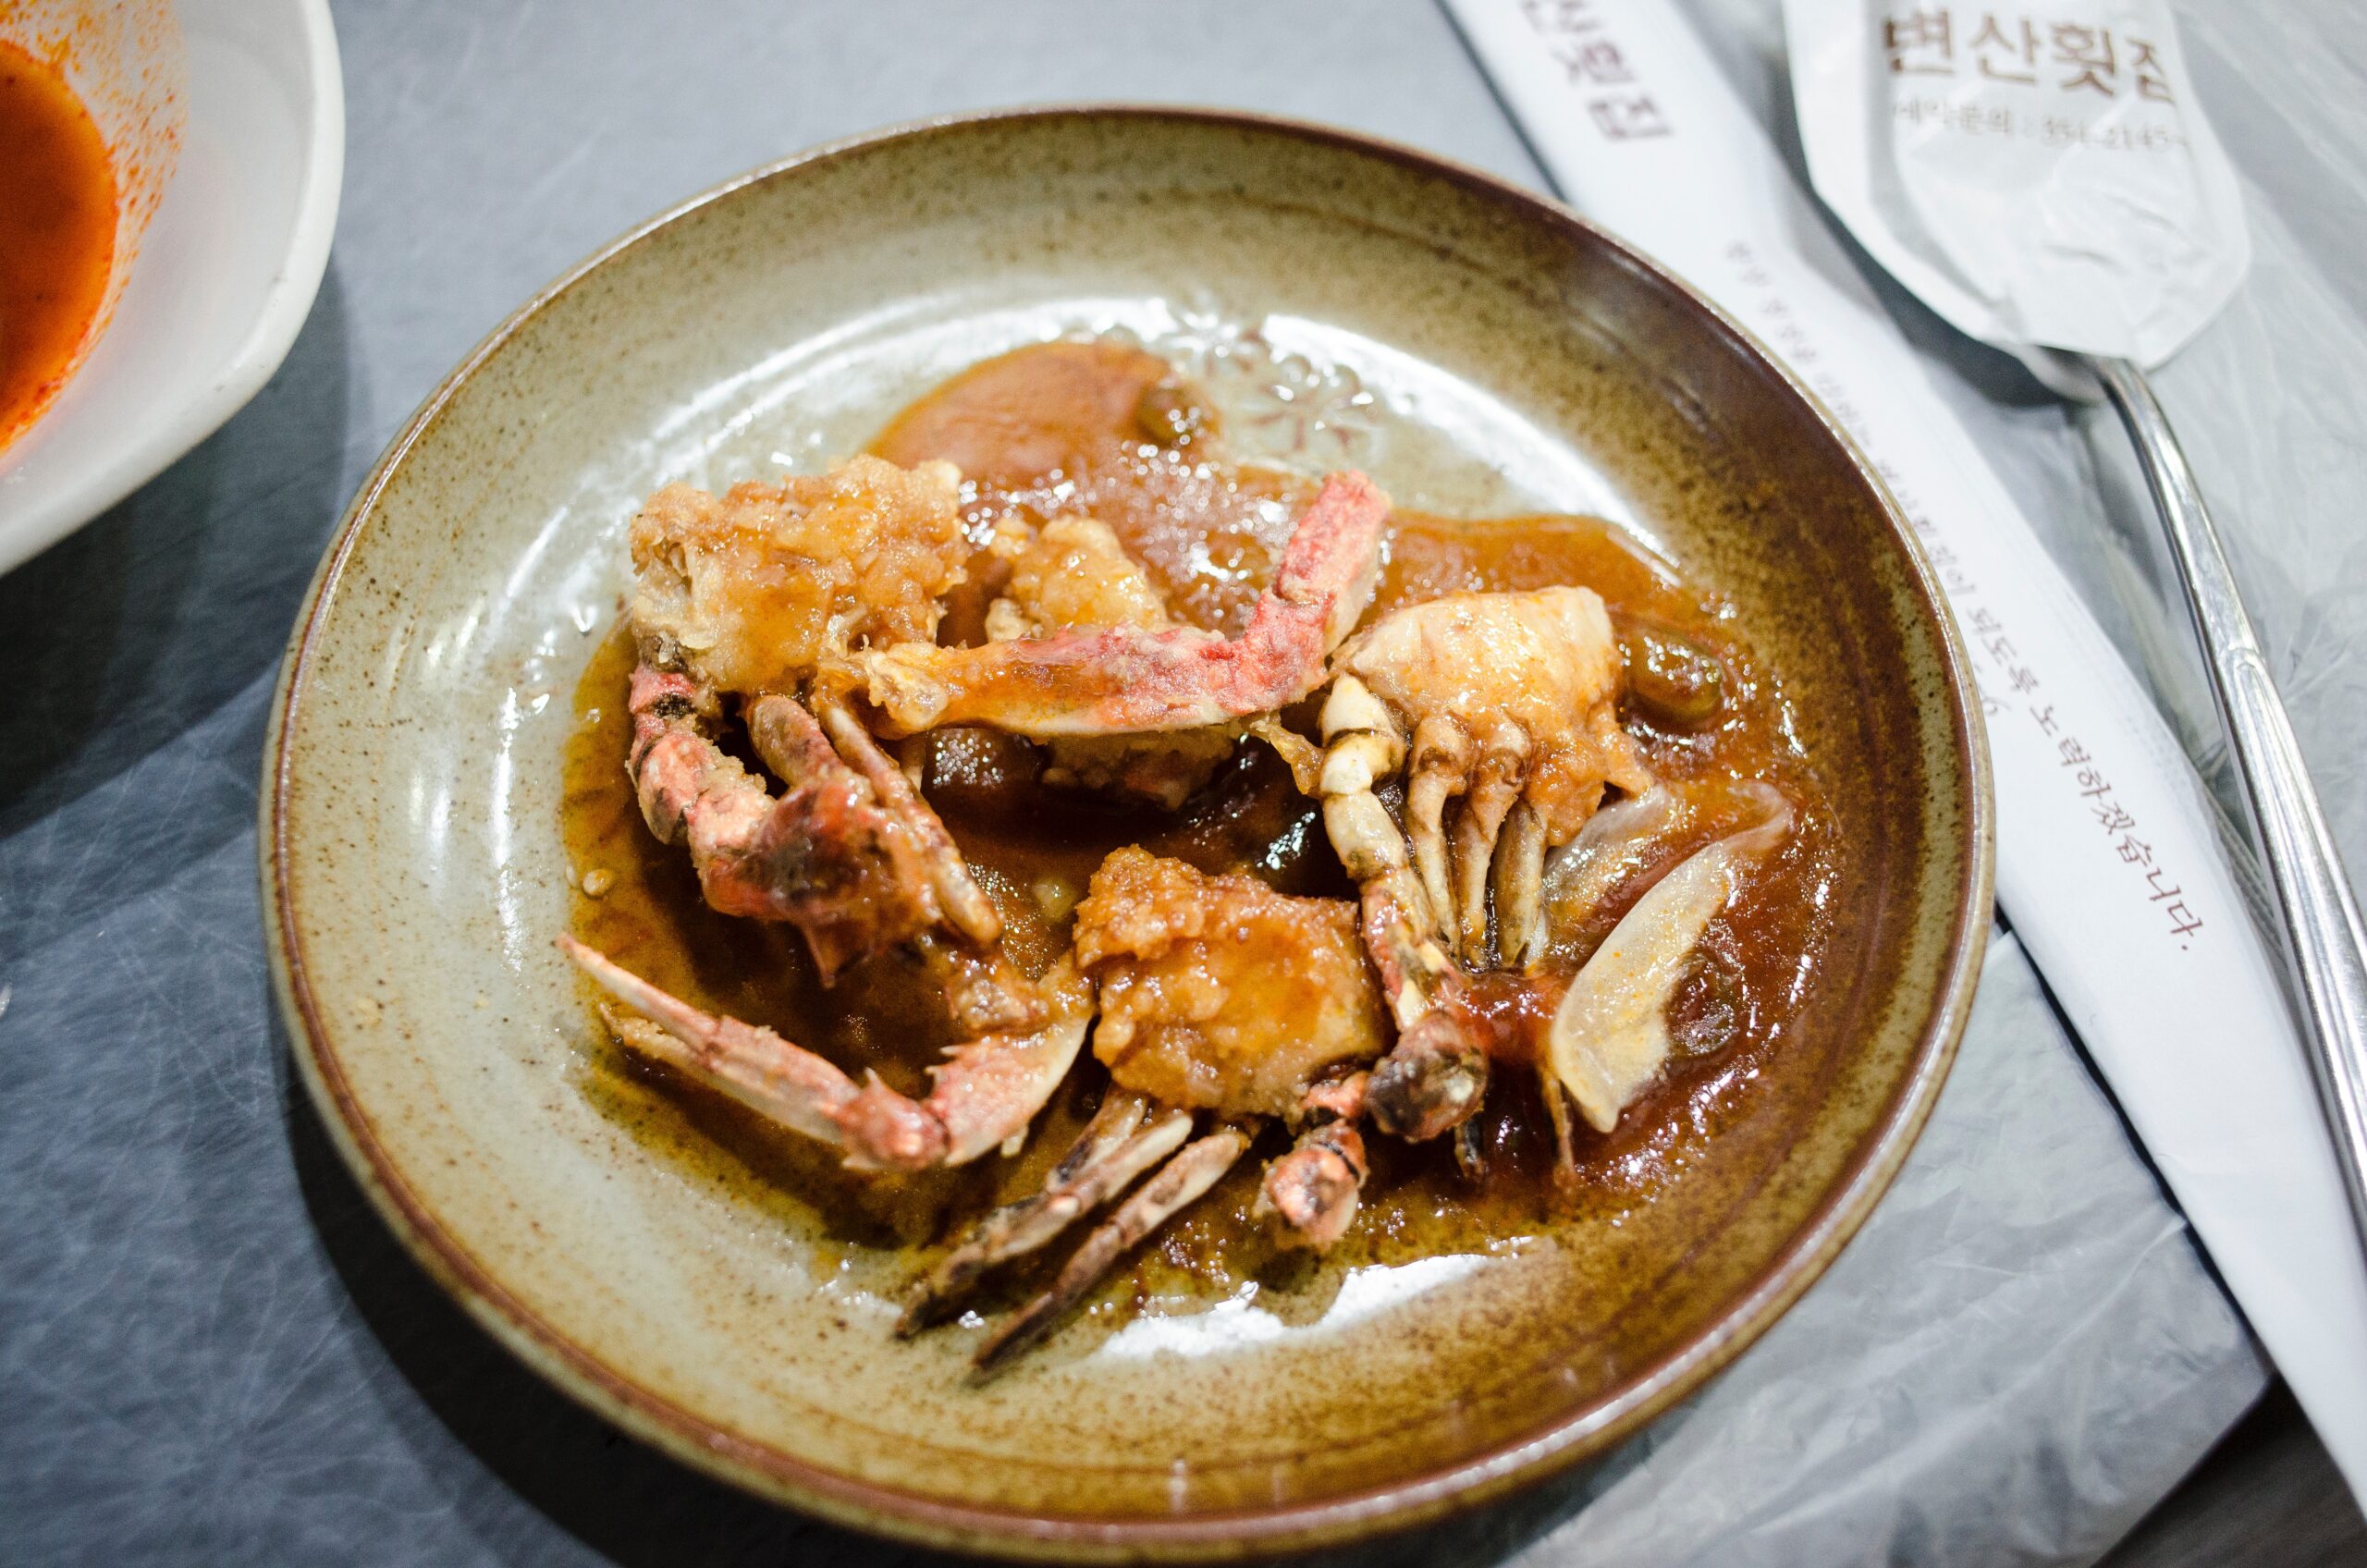 Alaskan King Crab Legs & Seafood